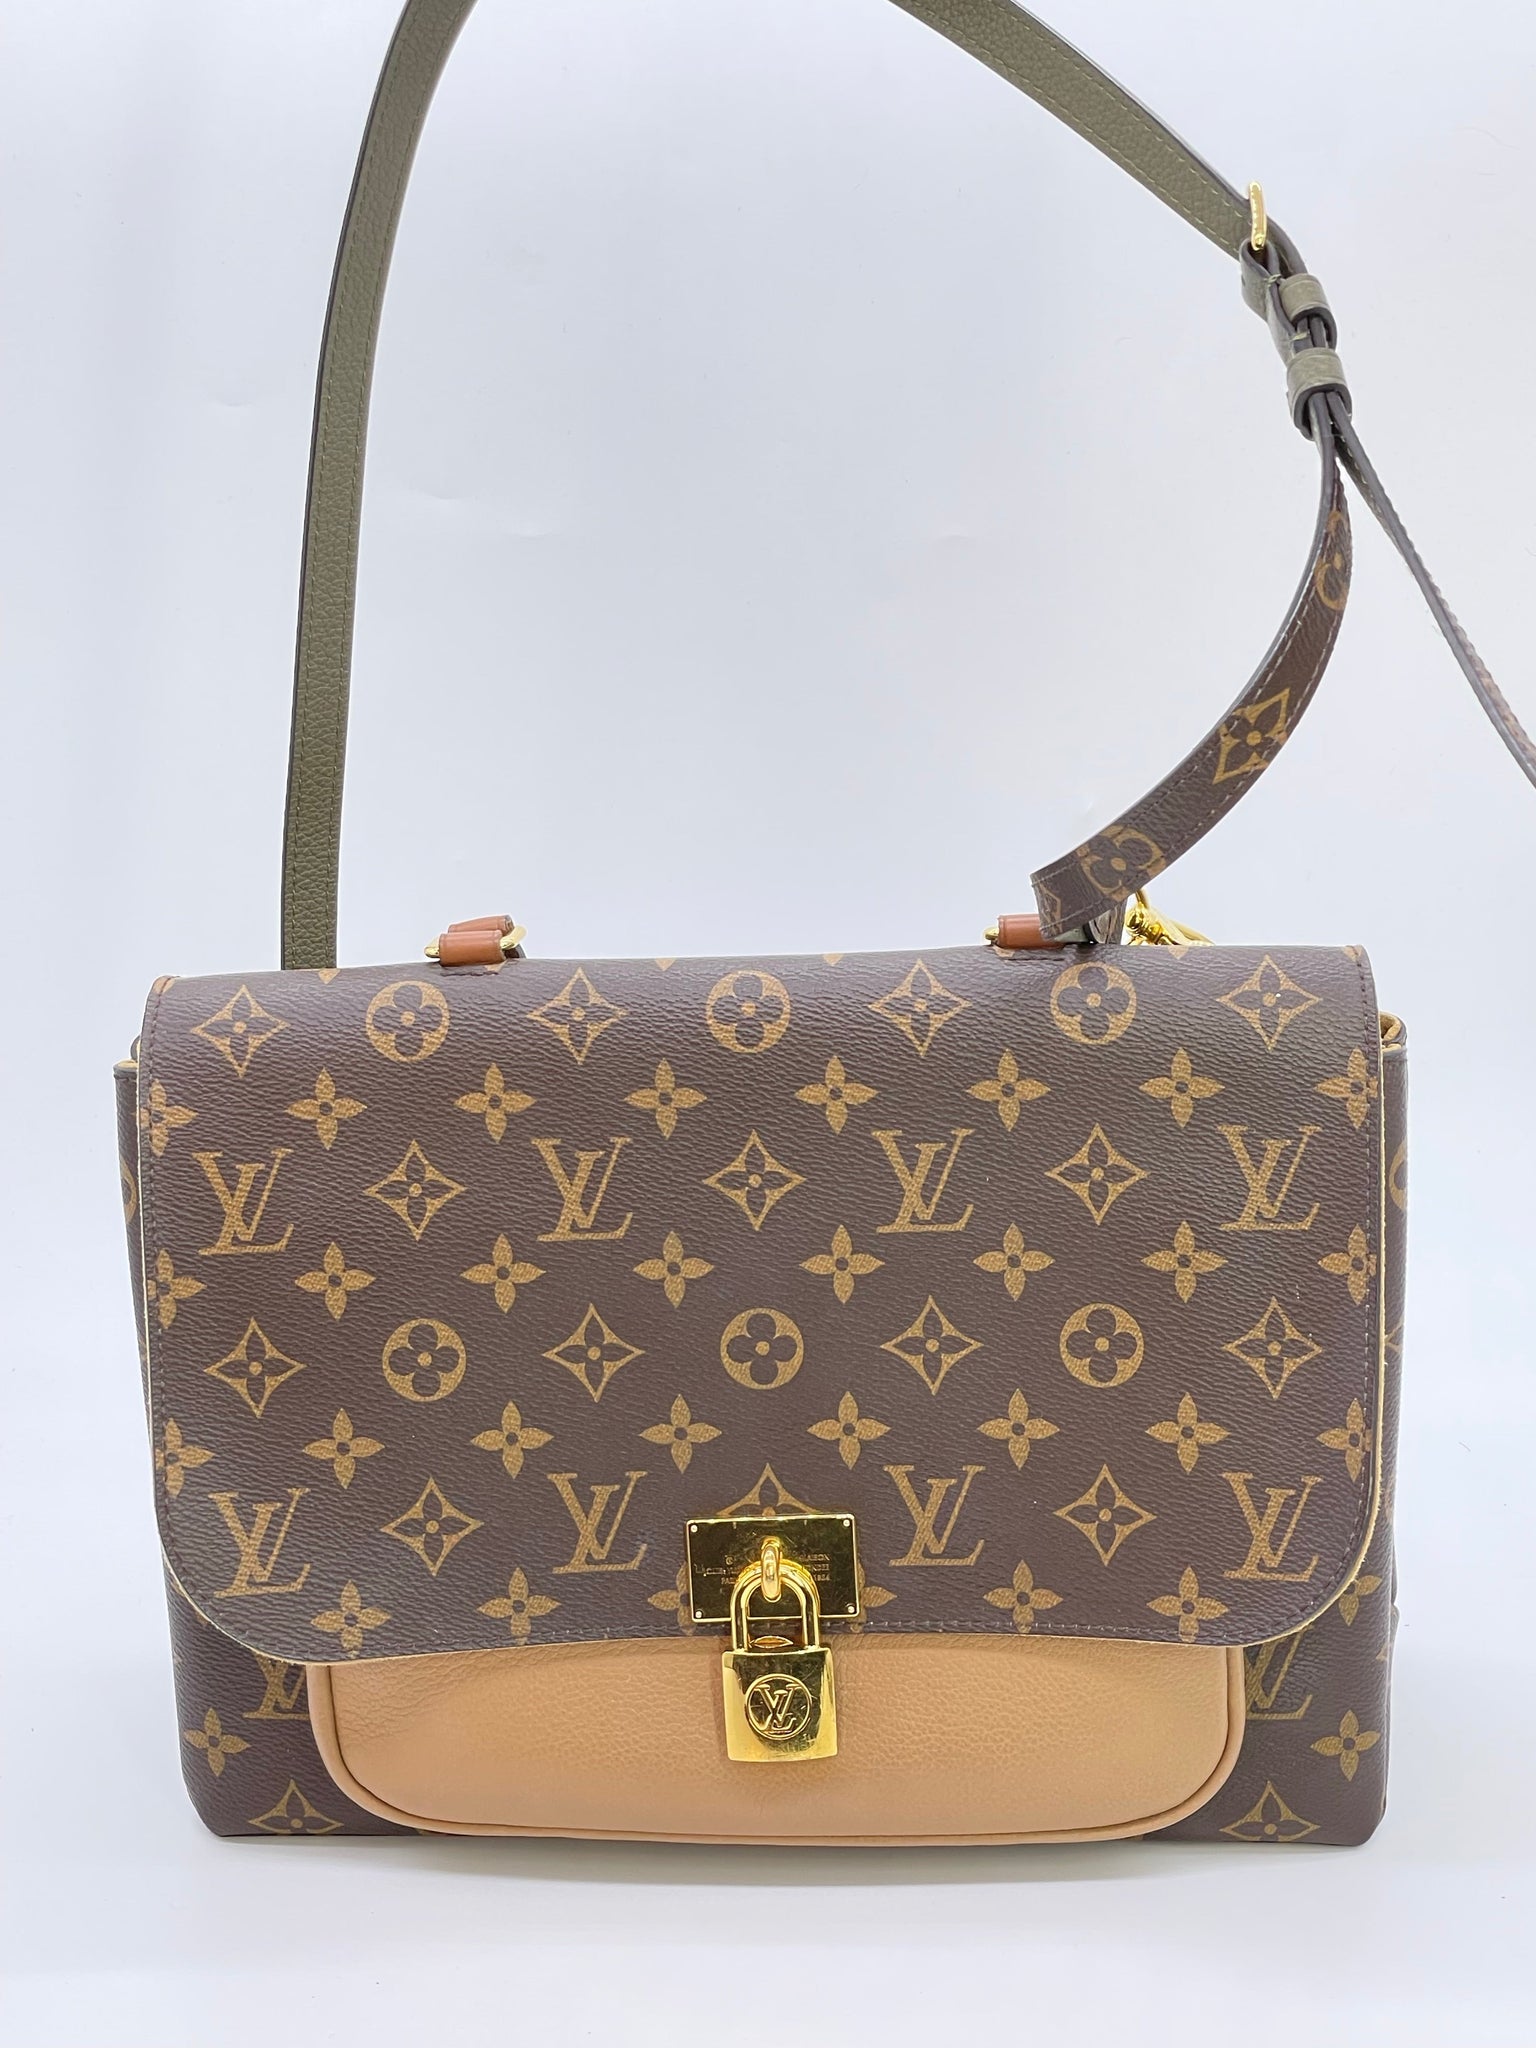 Louis Vuitton Marignan Monogram Canvas Shoulder bag in Excellent Condition